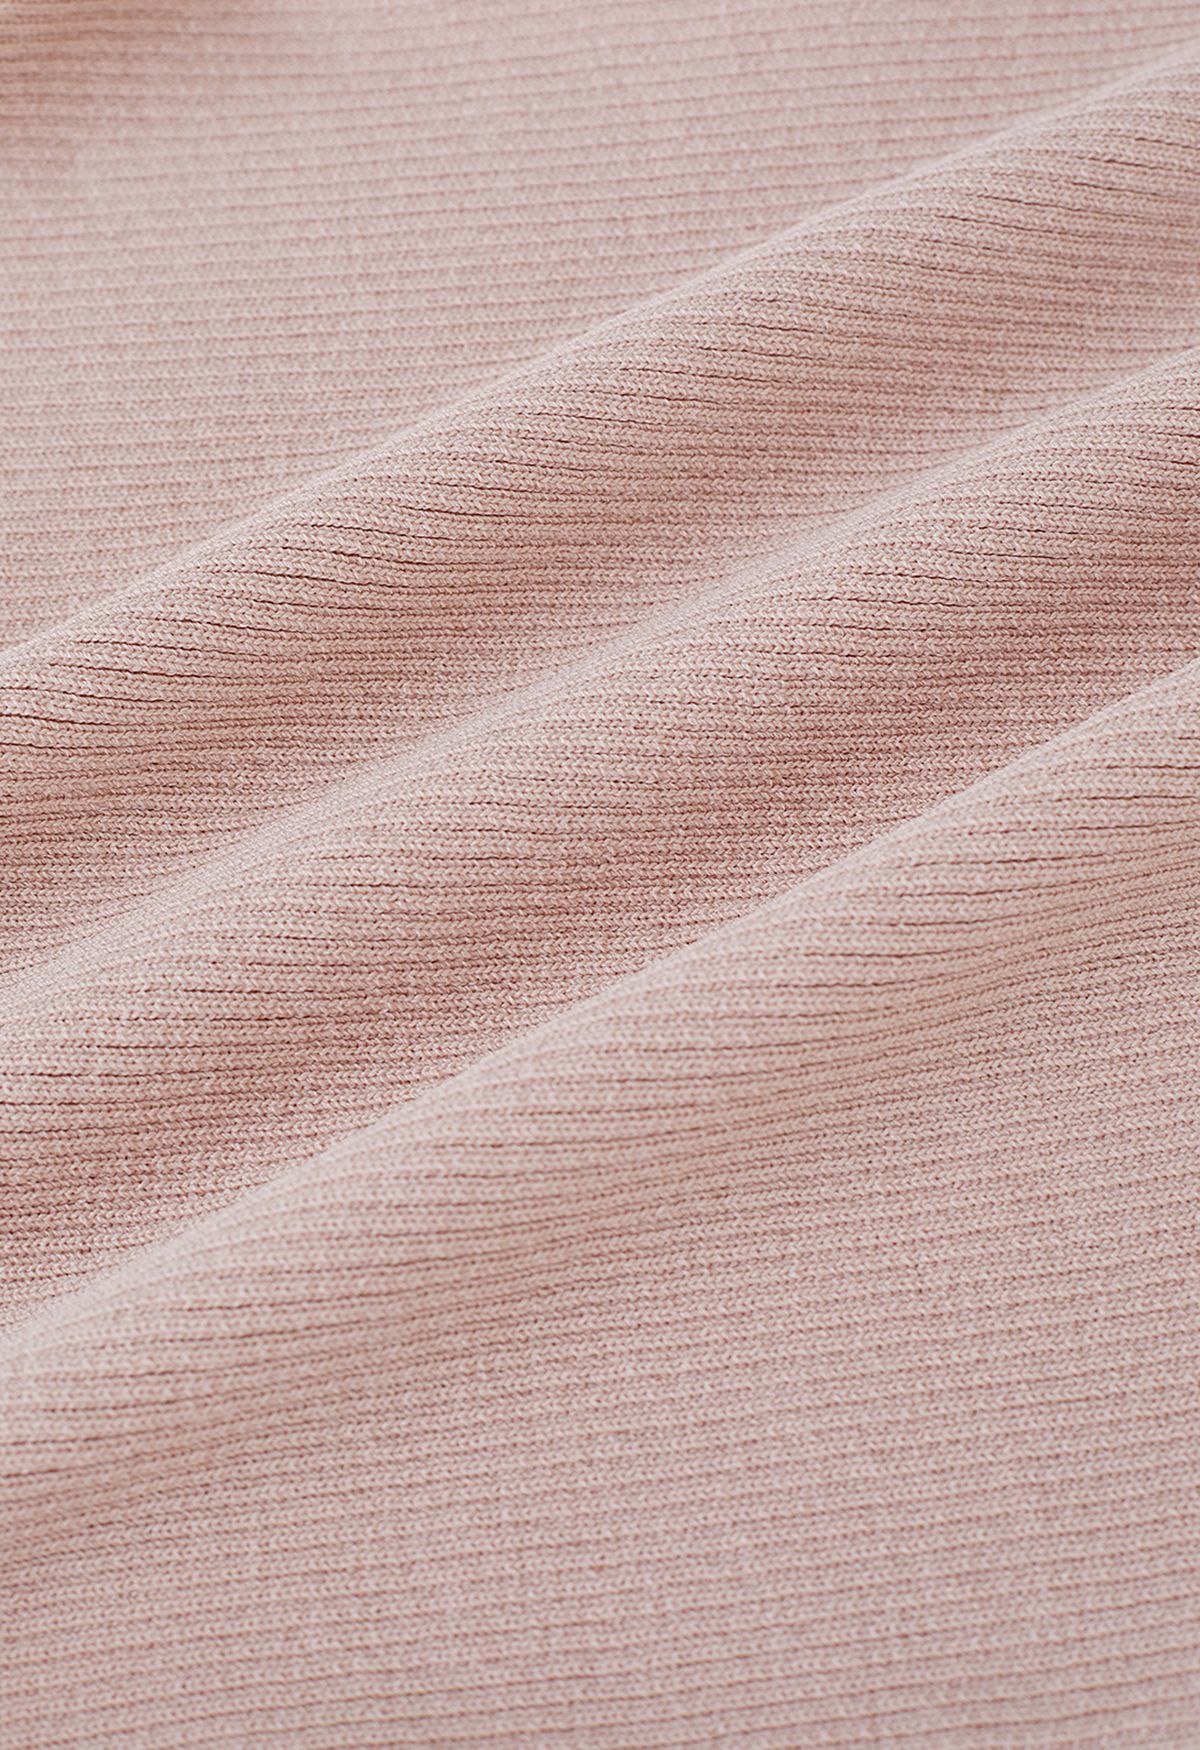 Spliced Tiered Flutter Sleeve Knit Crop Top in Pink